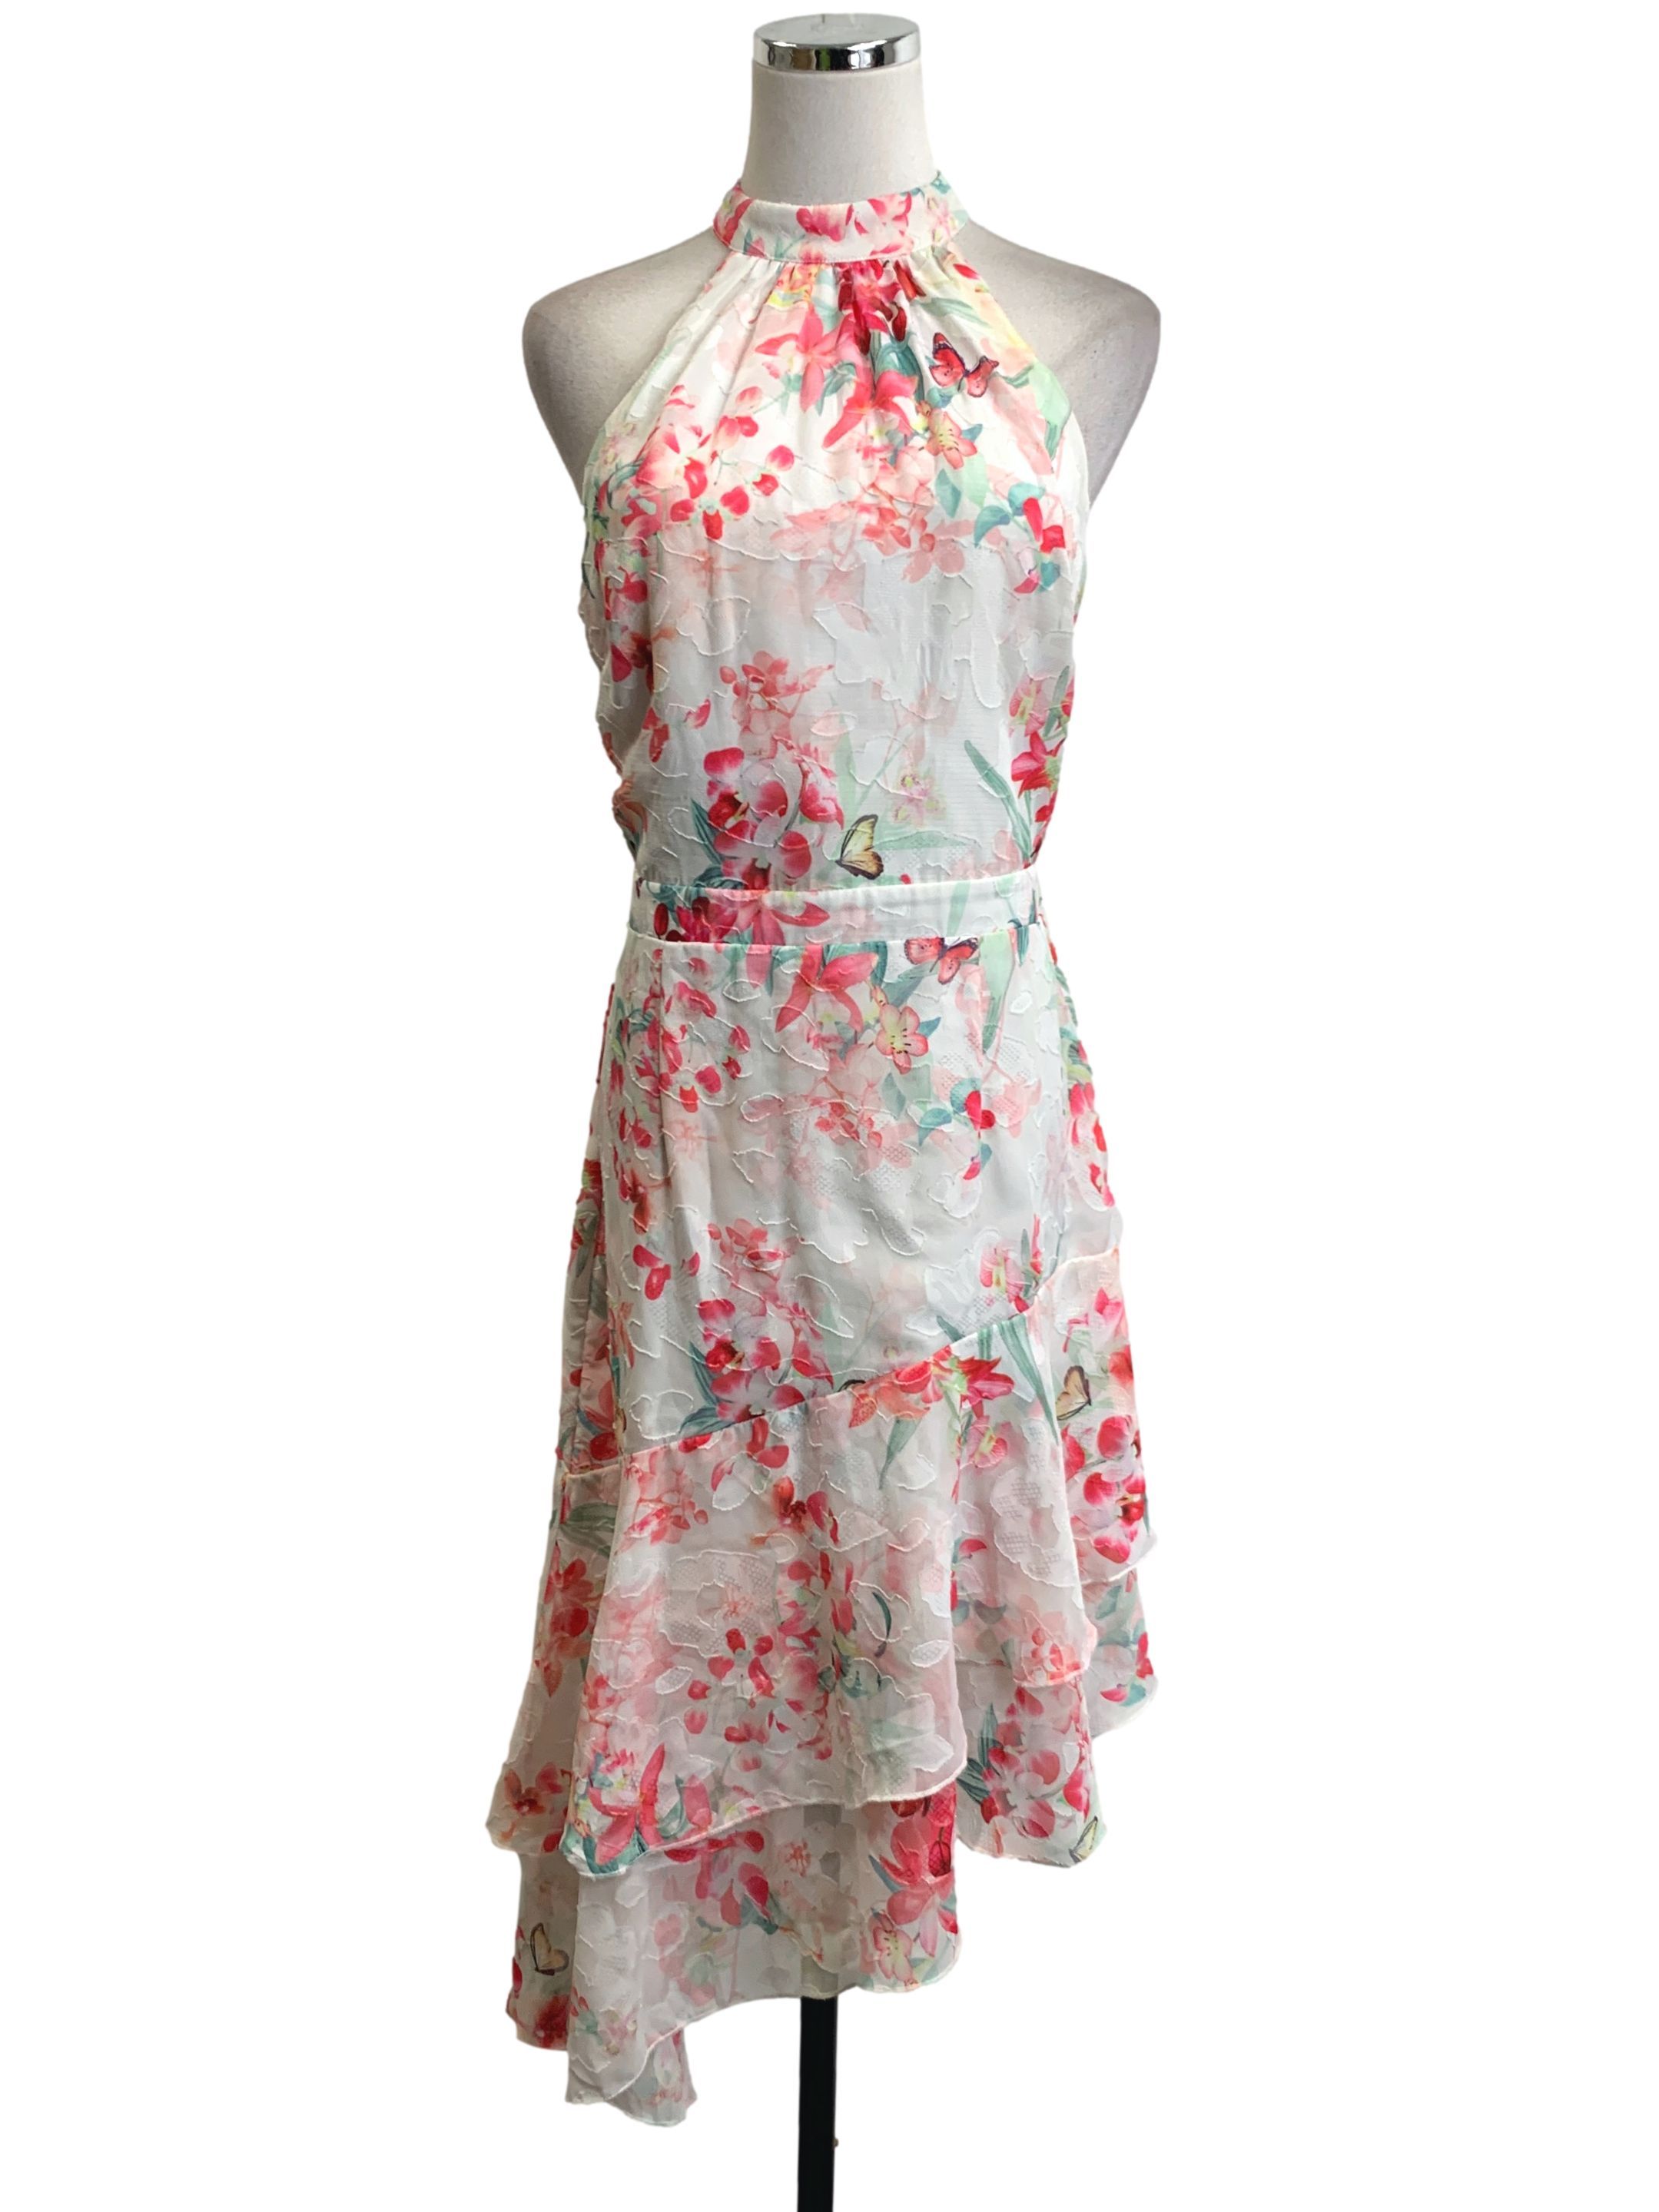 LIPSY London Multicoloured Flower High-Neck Dress, Women's Fashion